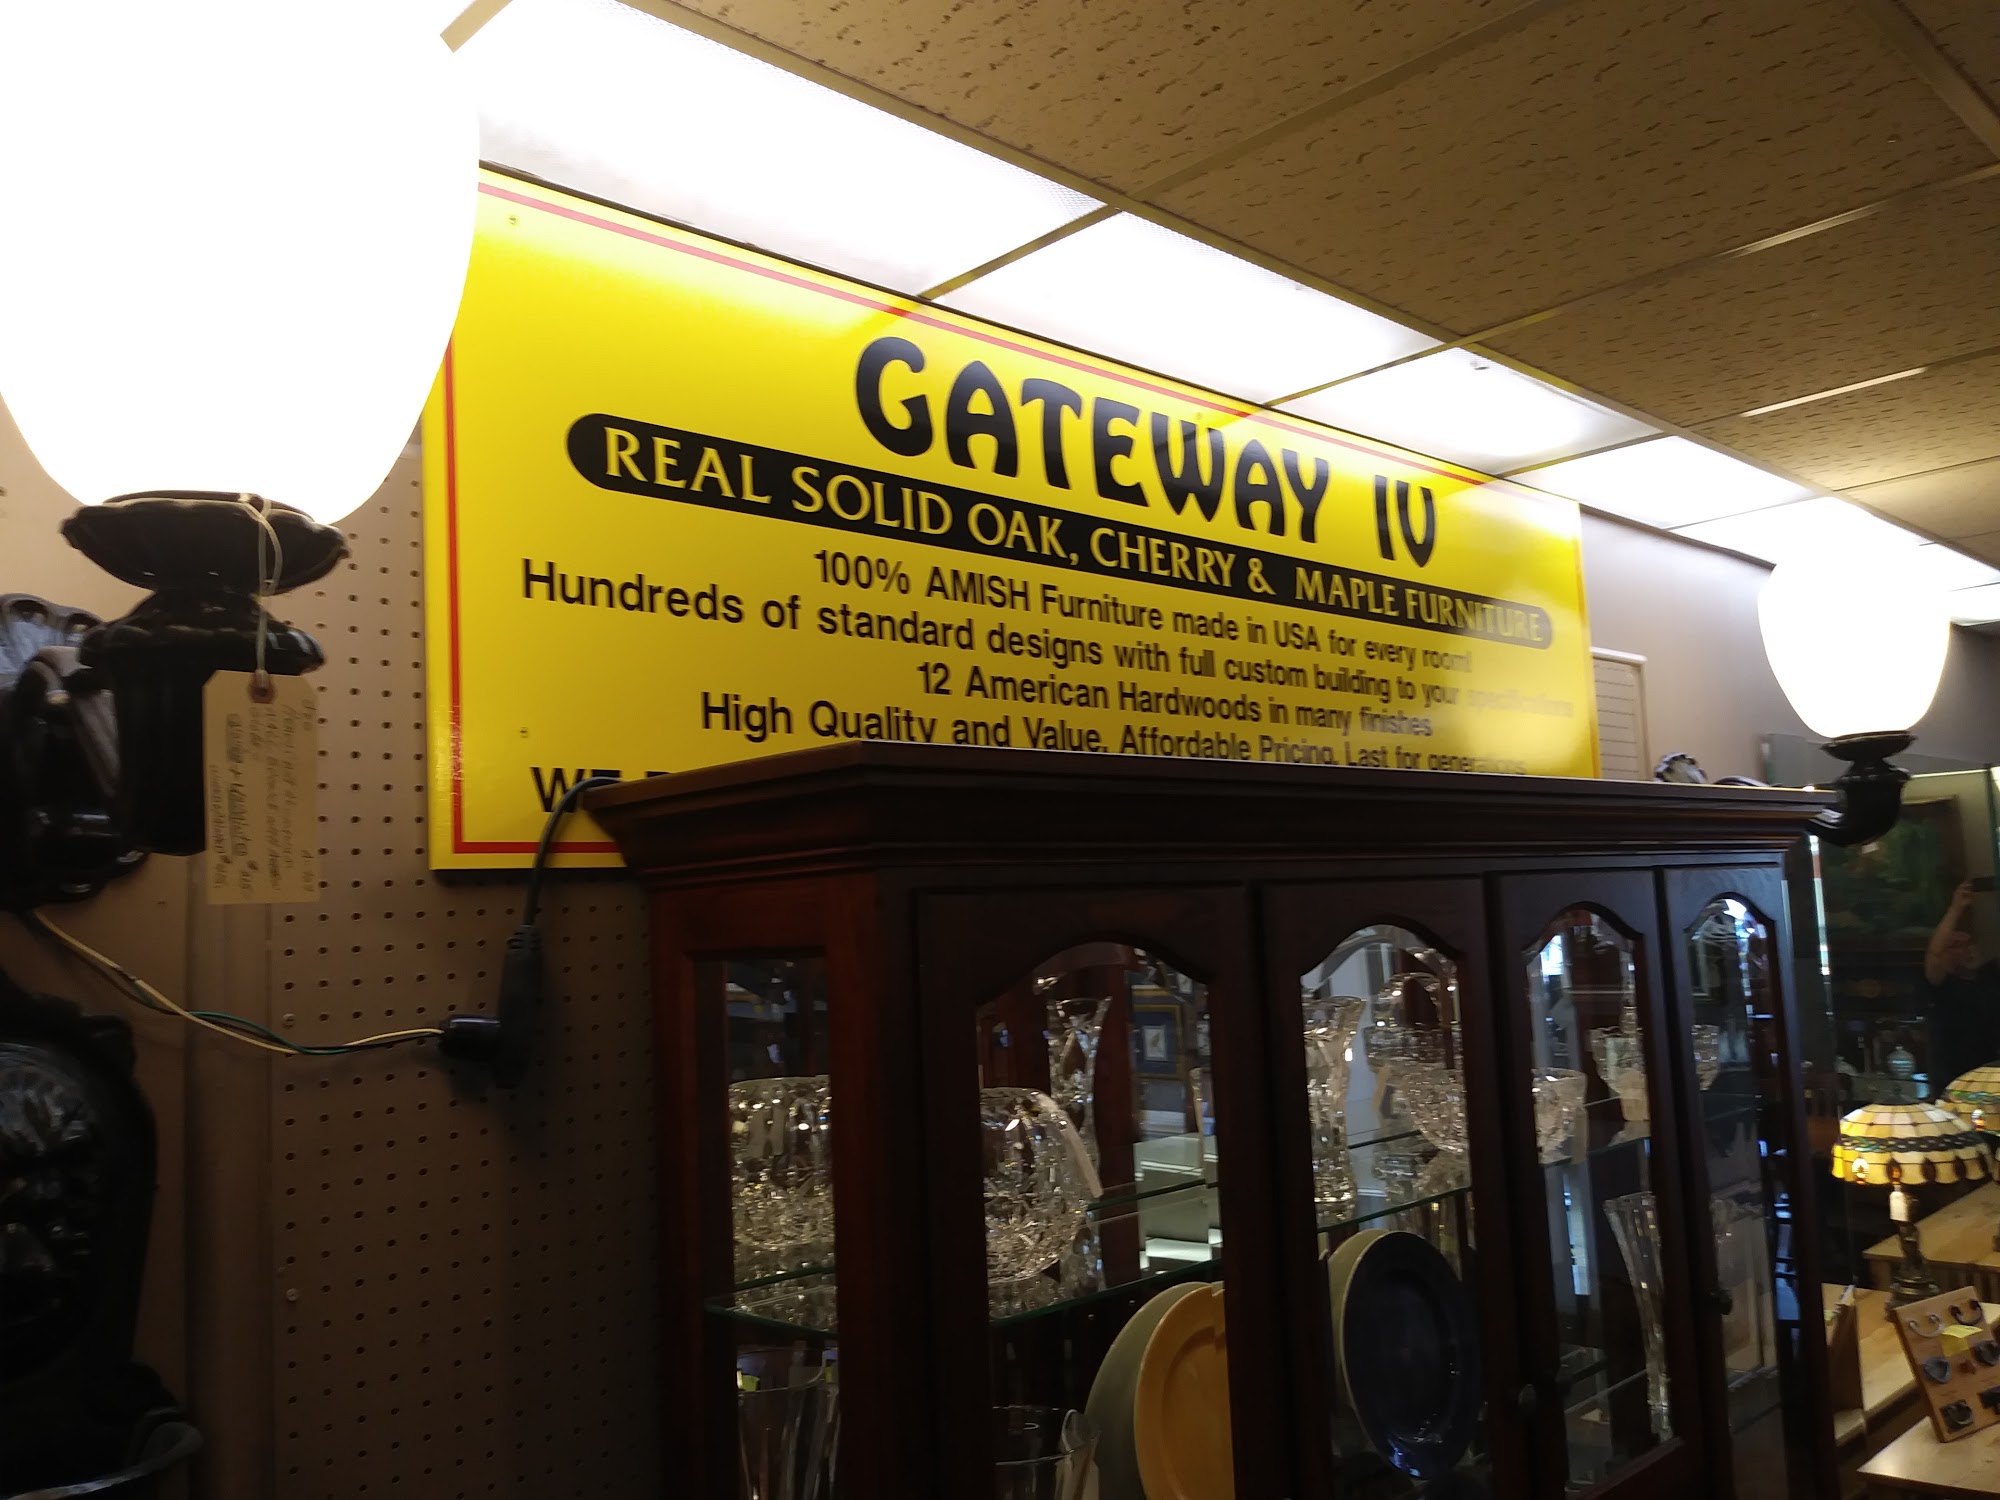 Gateway IV Real Solid Oak, Cherry & Maple Furniture